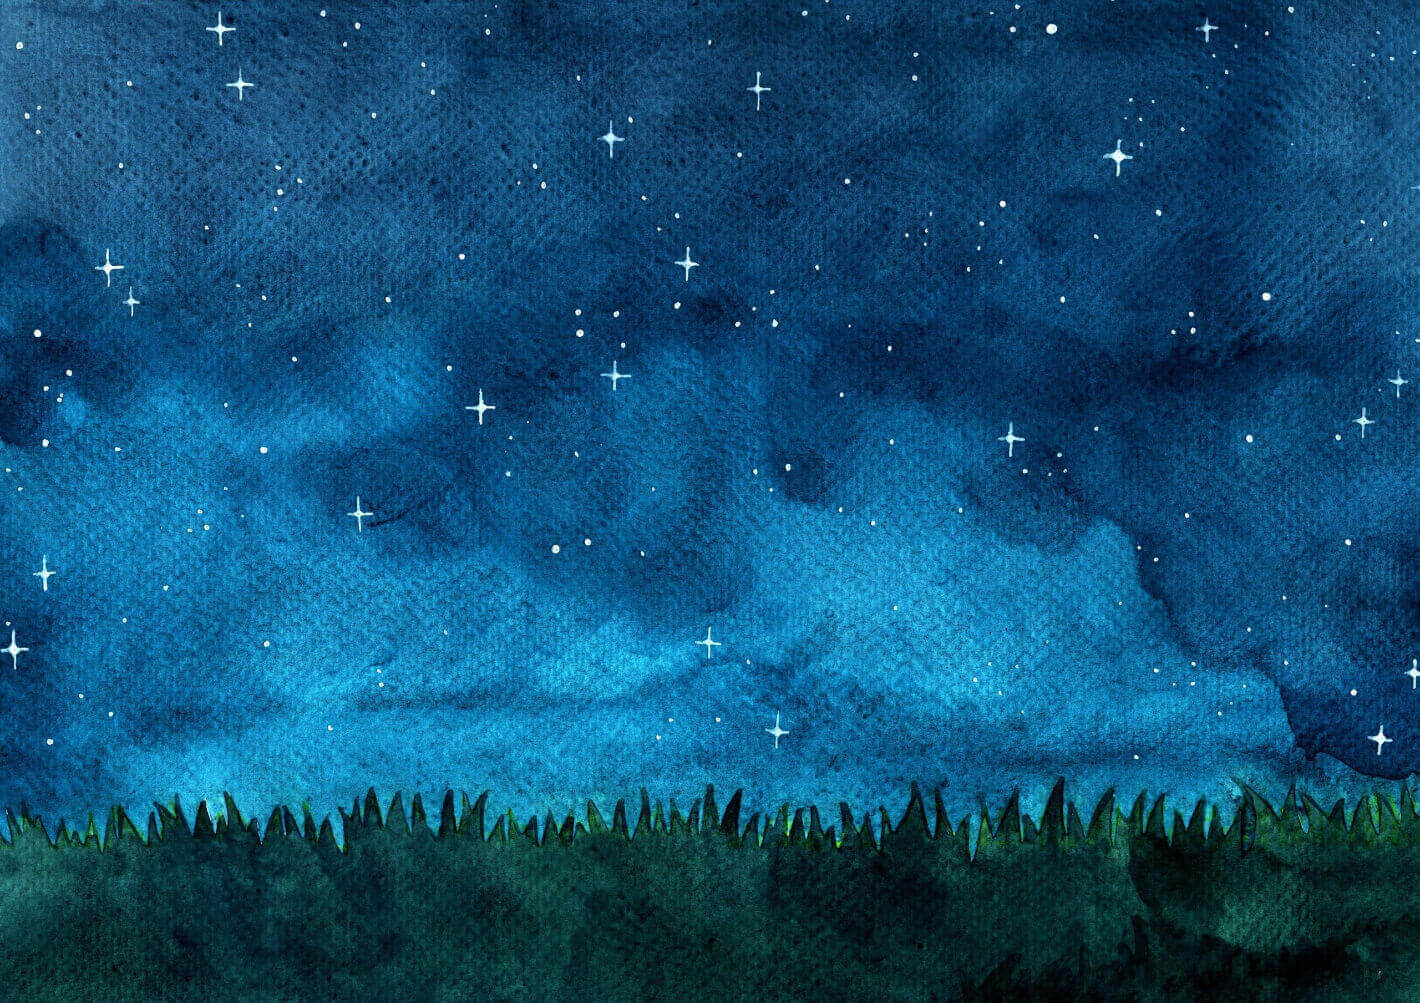 A beautiful artwork of the night sky